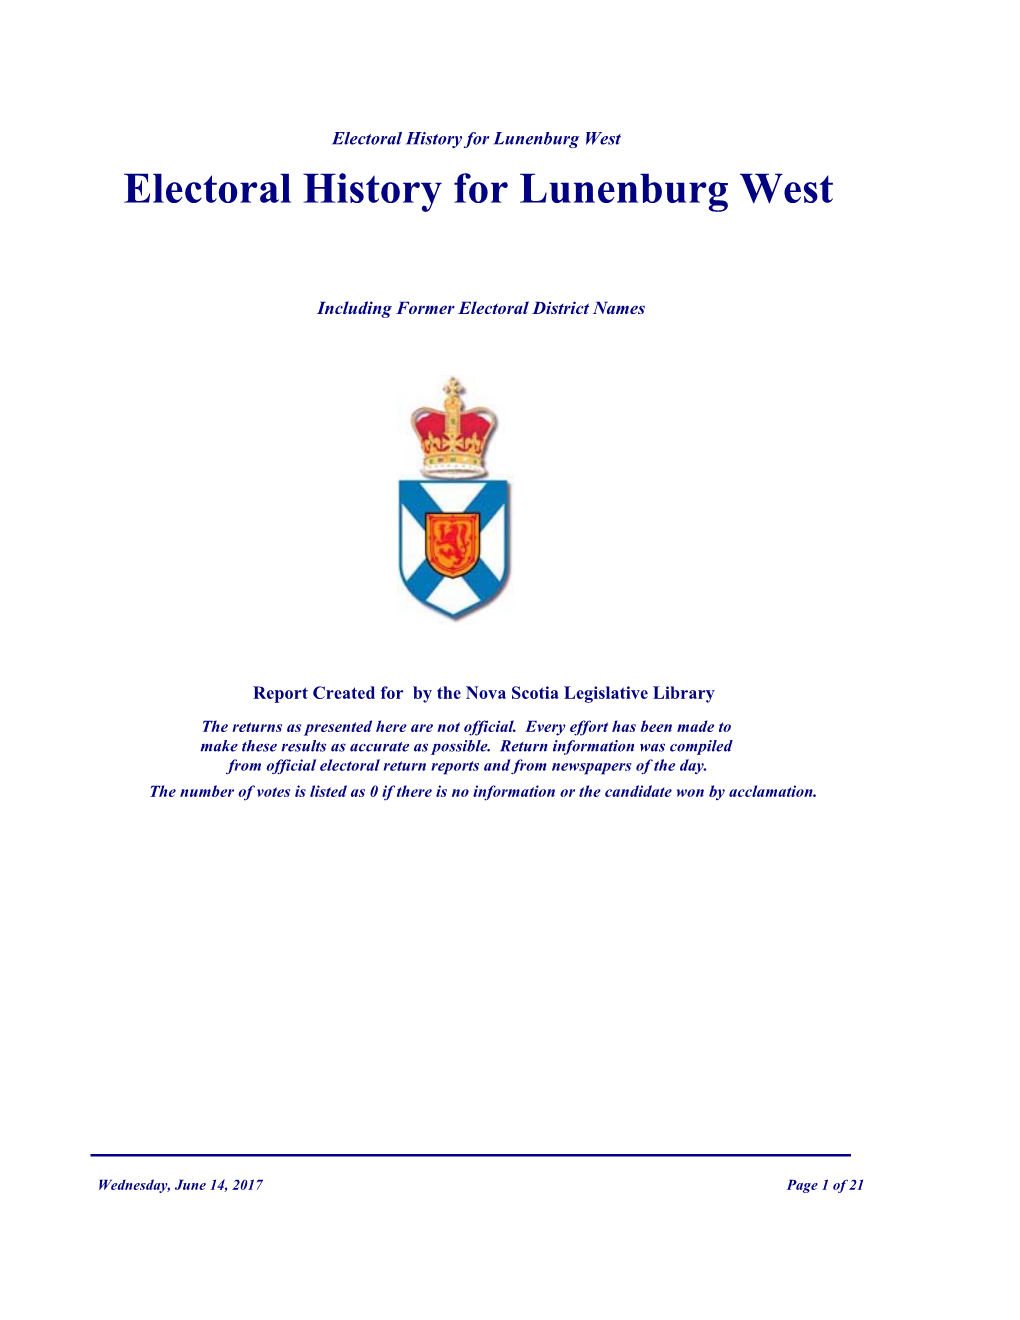 Lunenburg West Electoral History for Lunenburg West